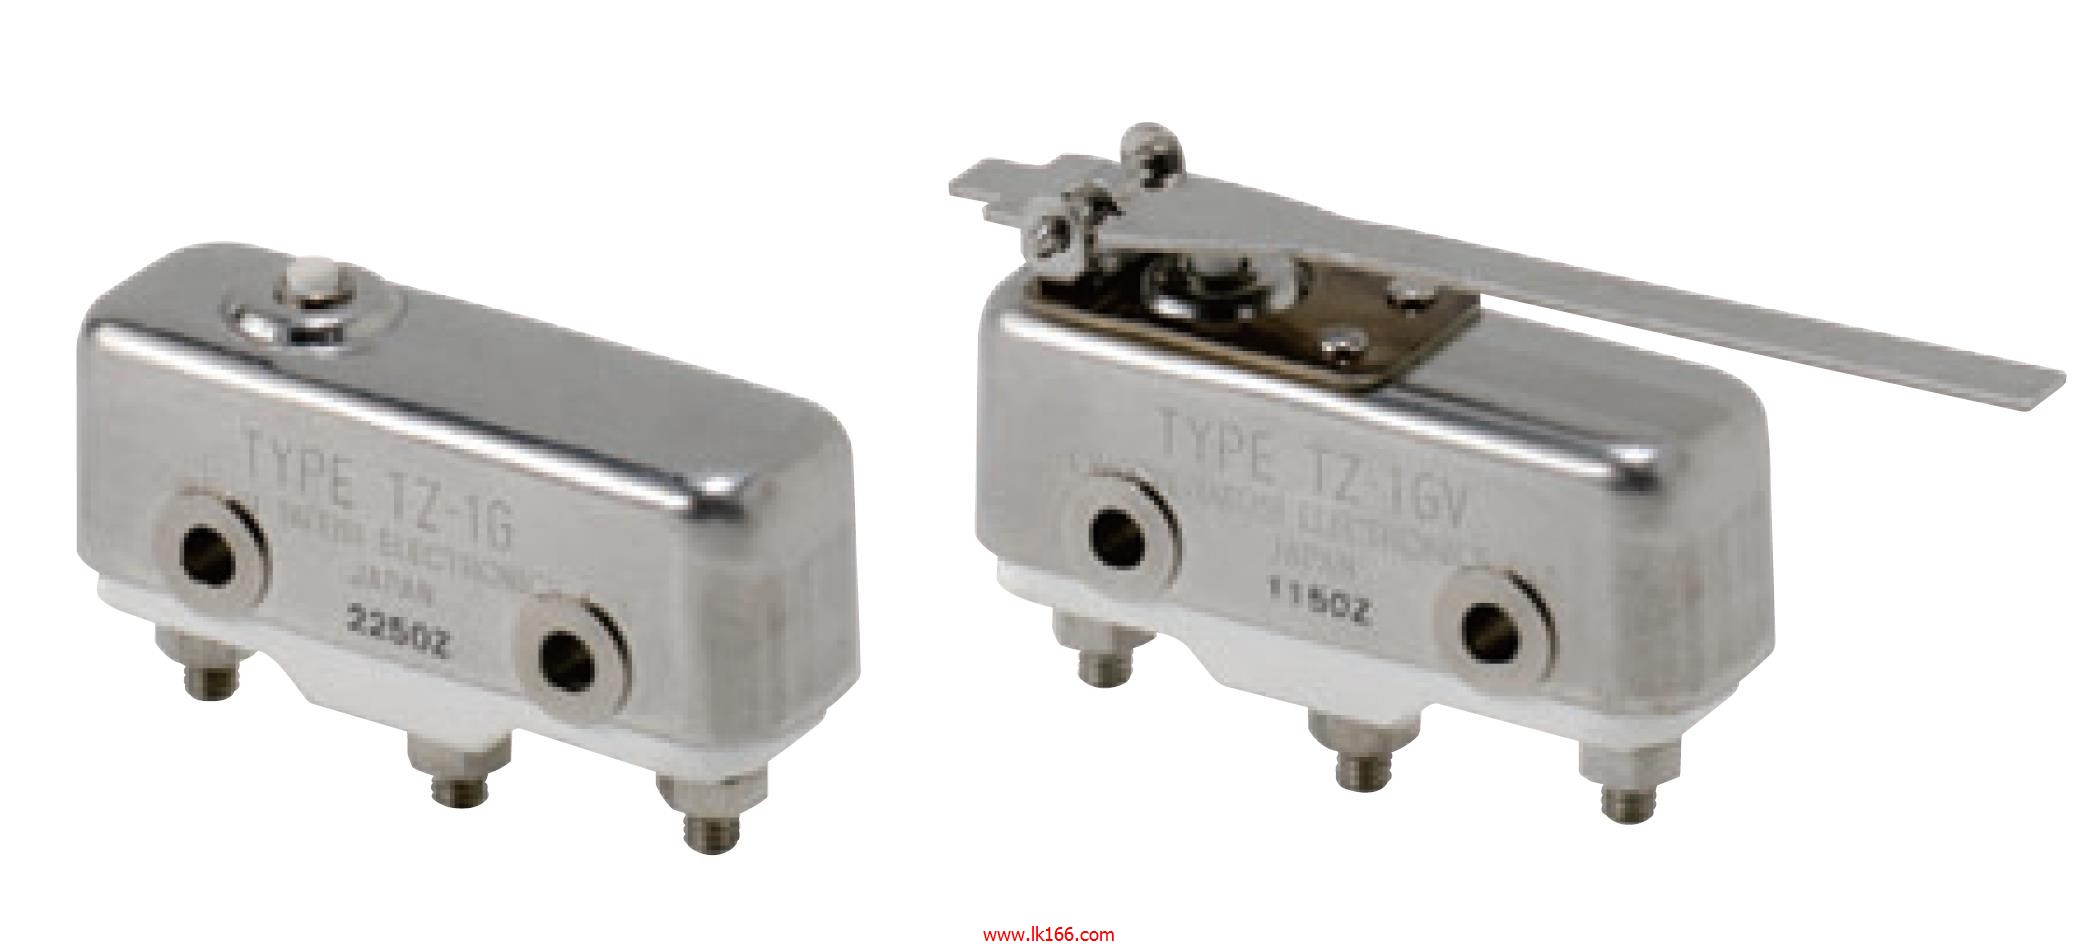 OMRON High-temperature Basic Switch TZ-1GV